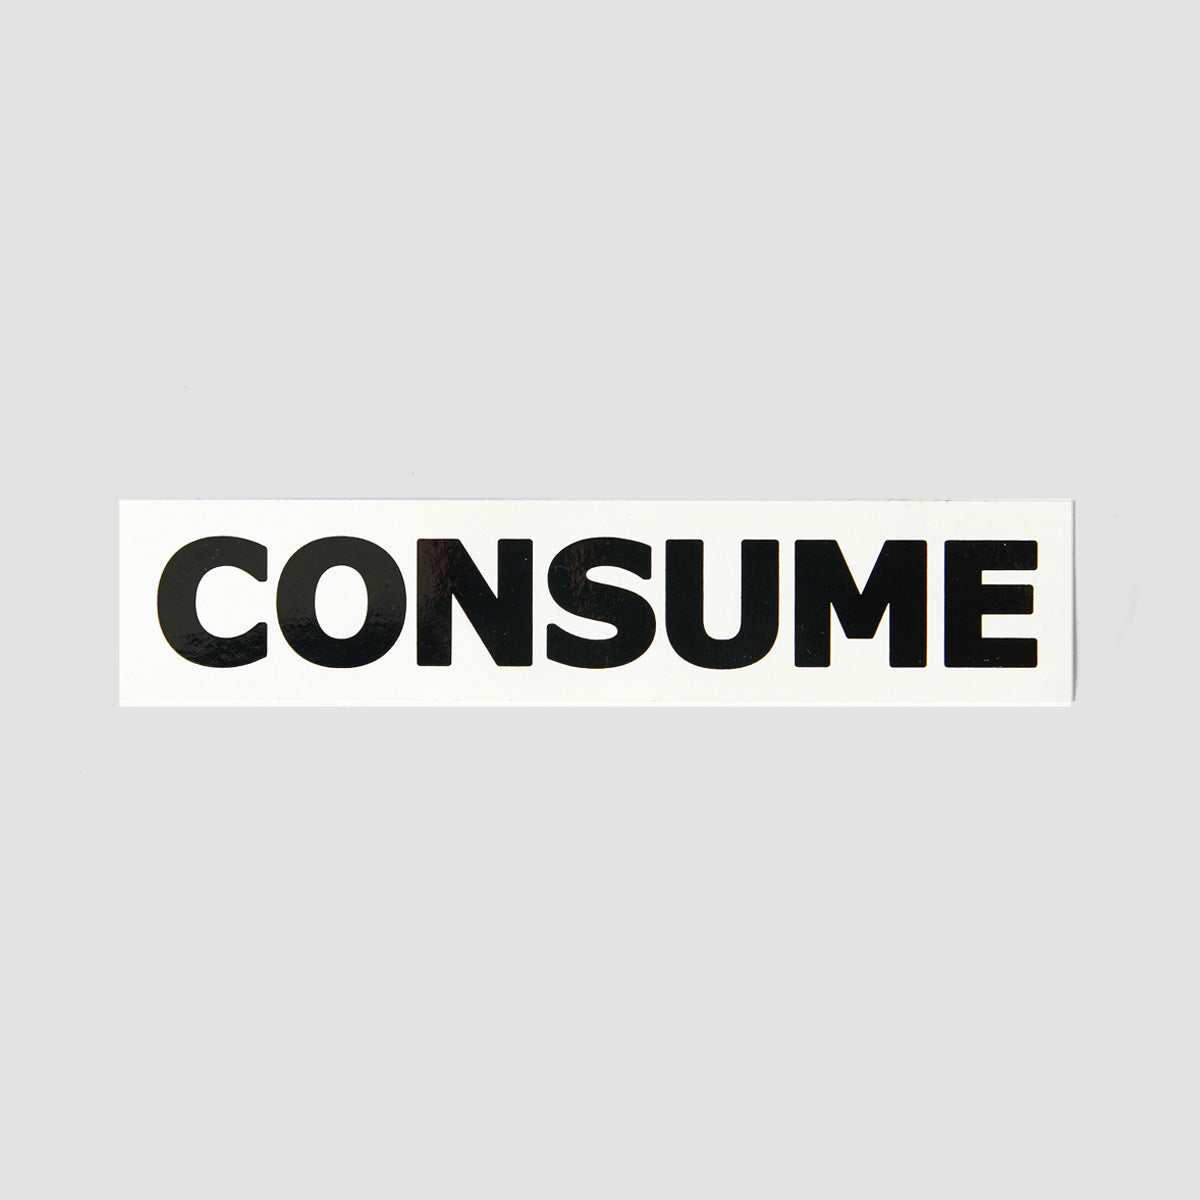 Consume Logo Sticker White/Black 120x25mm